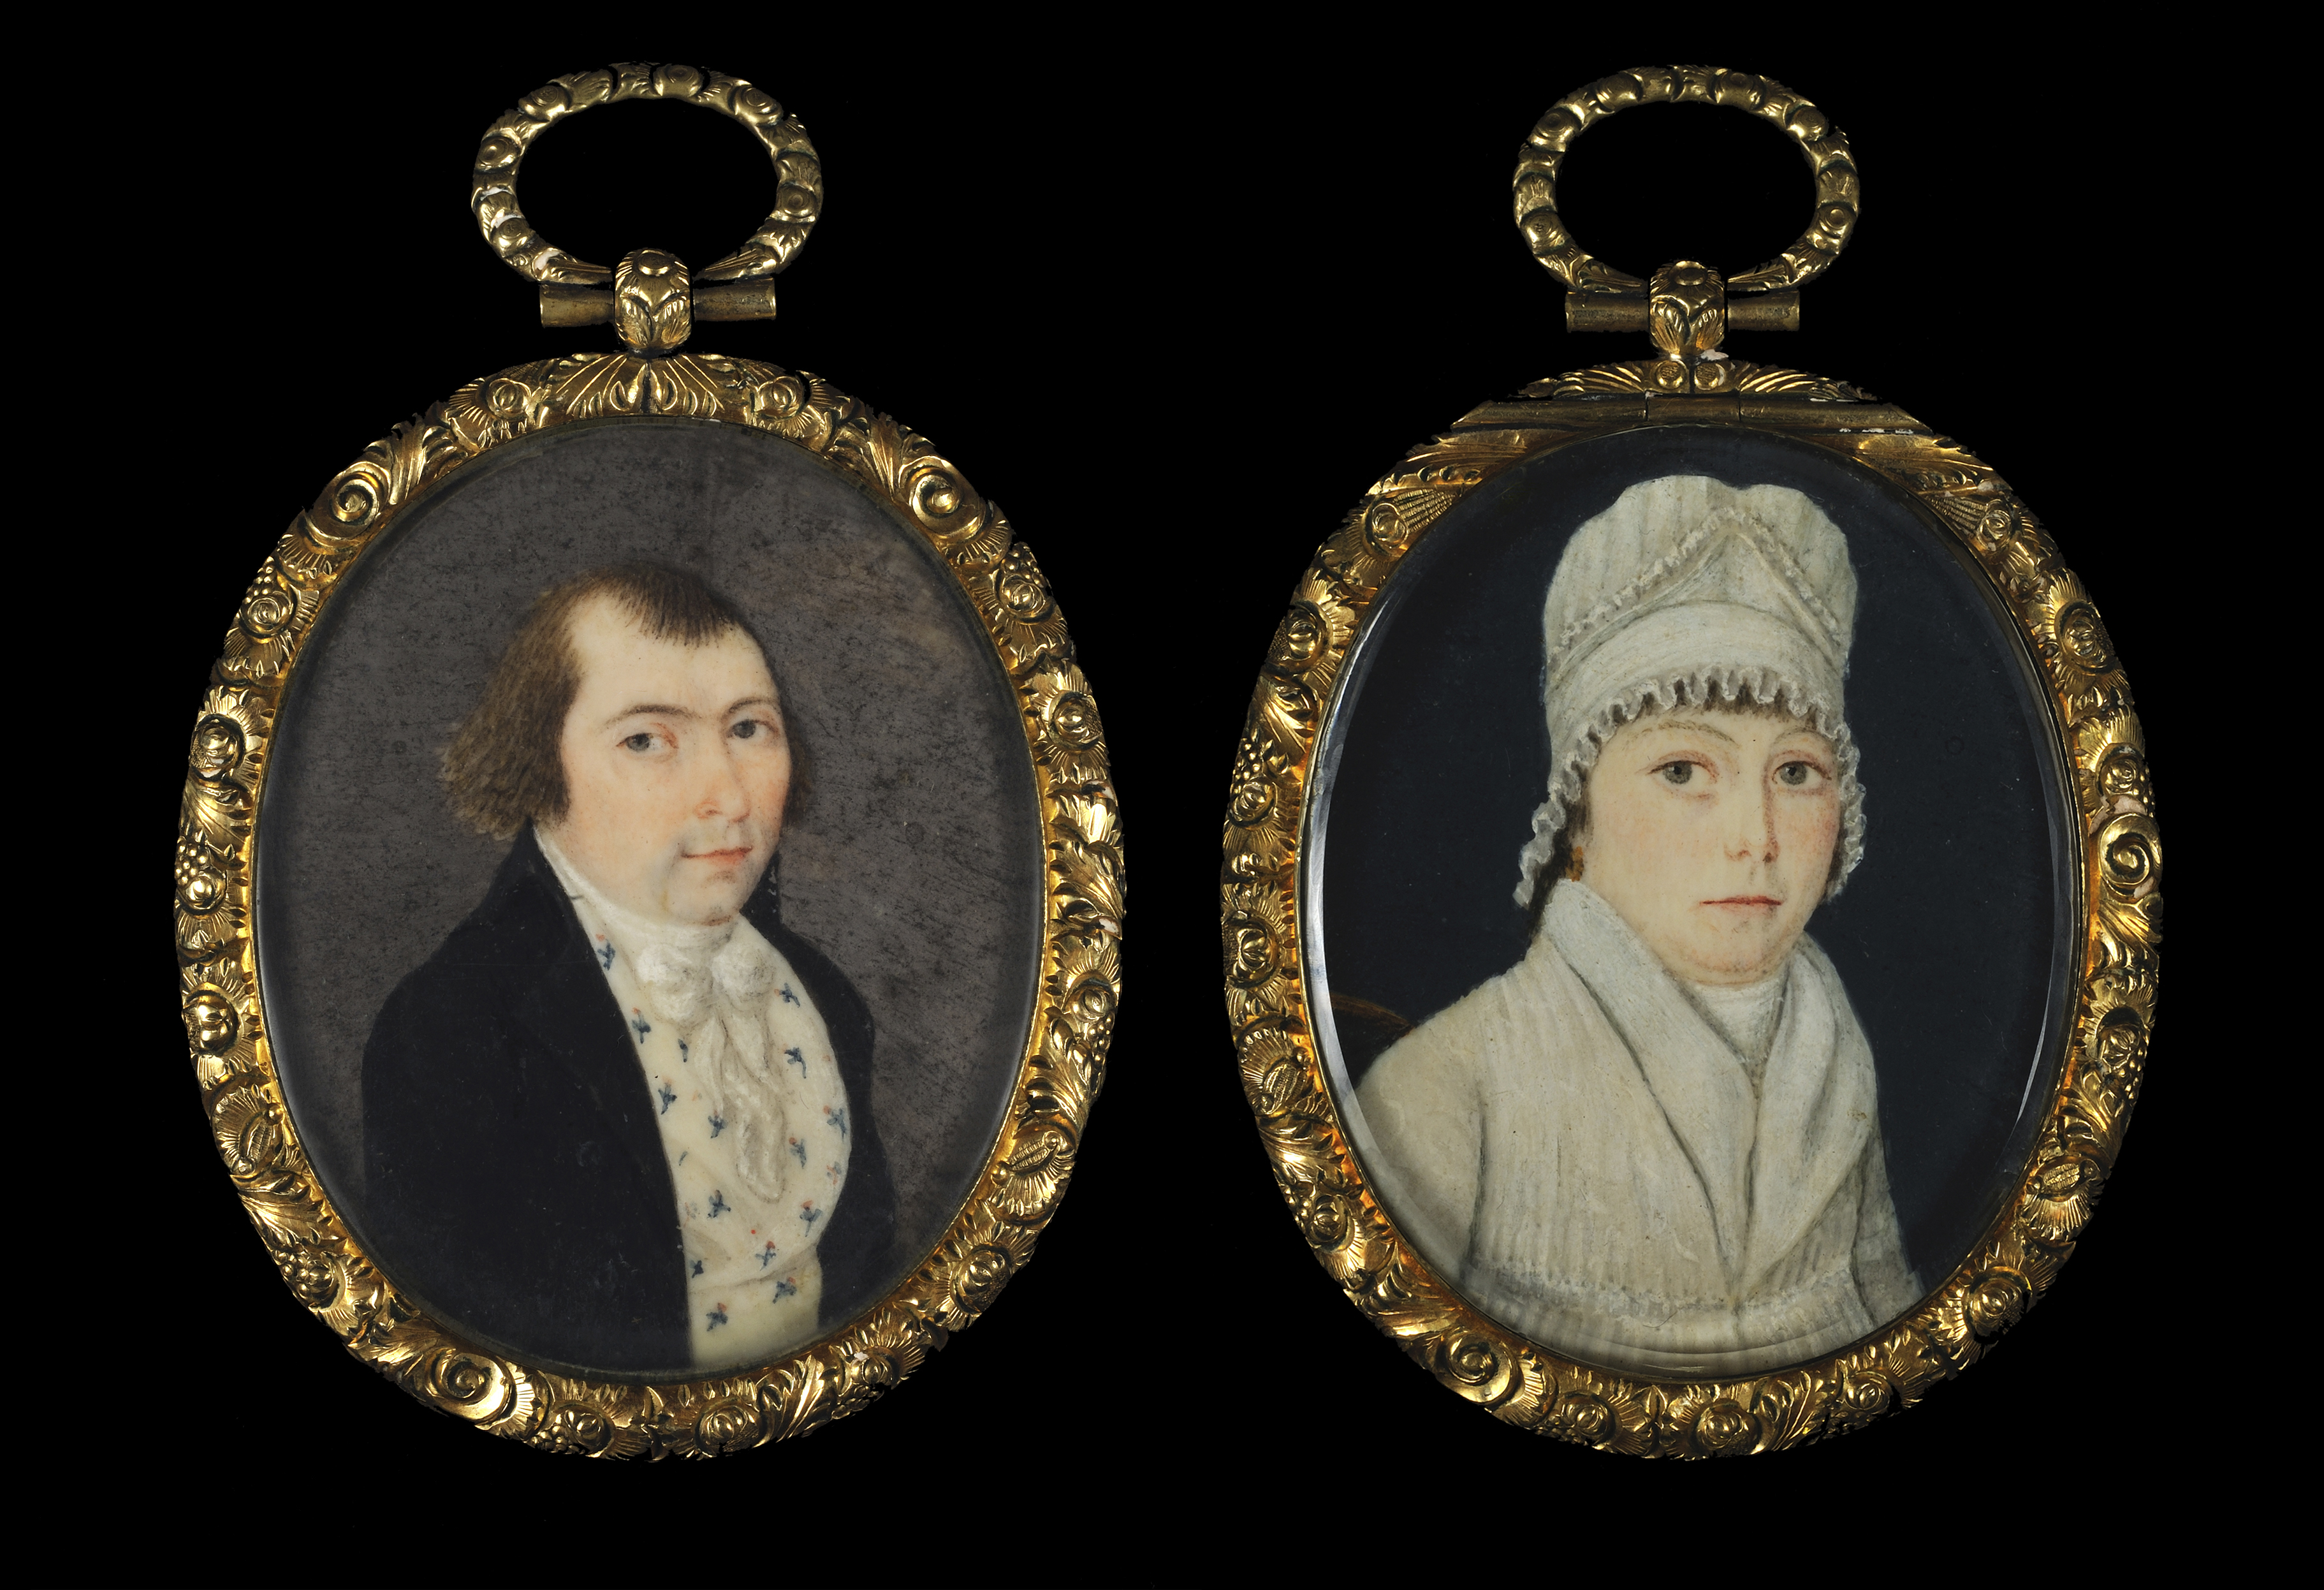 Mr. and Mrs. Frederick Weissenfels portrait miniature, ca. 1770-1775